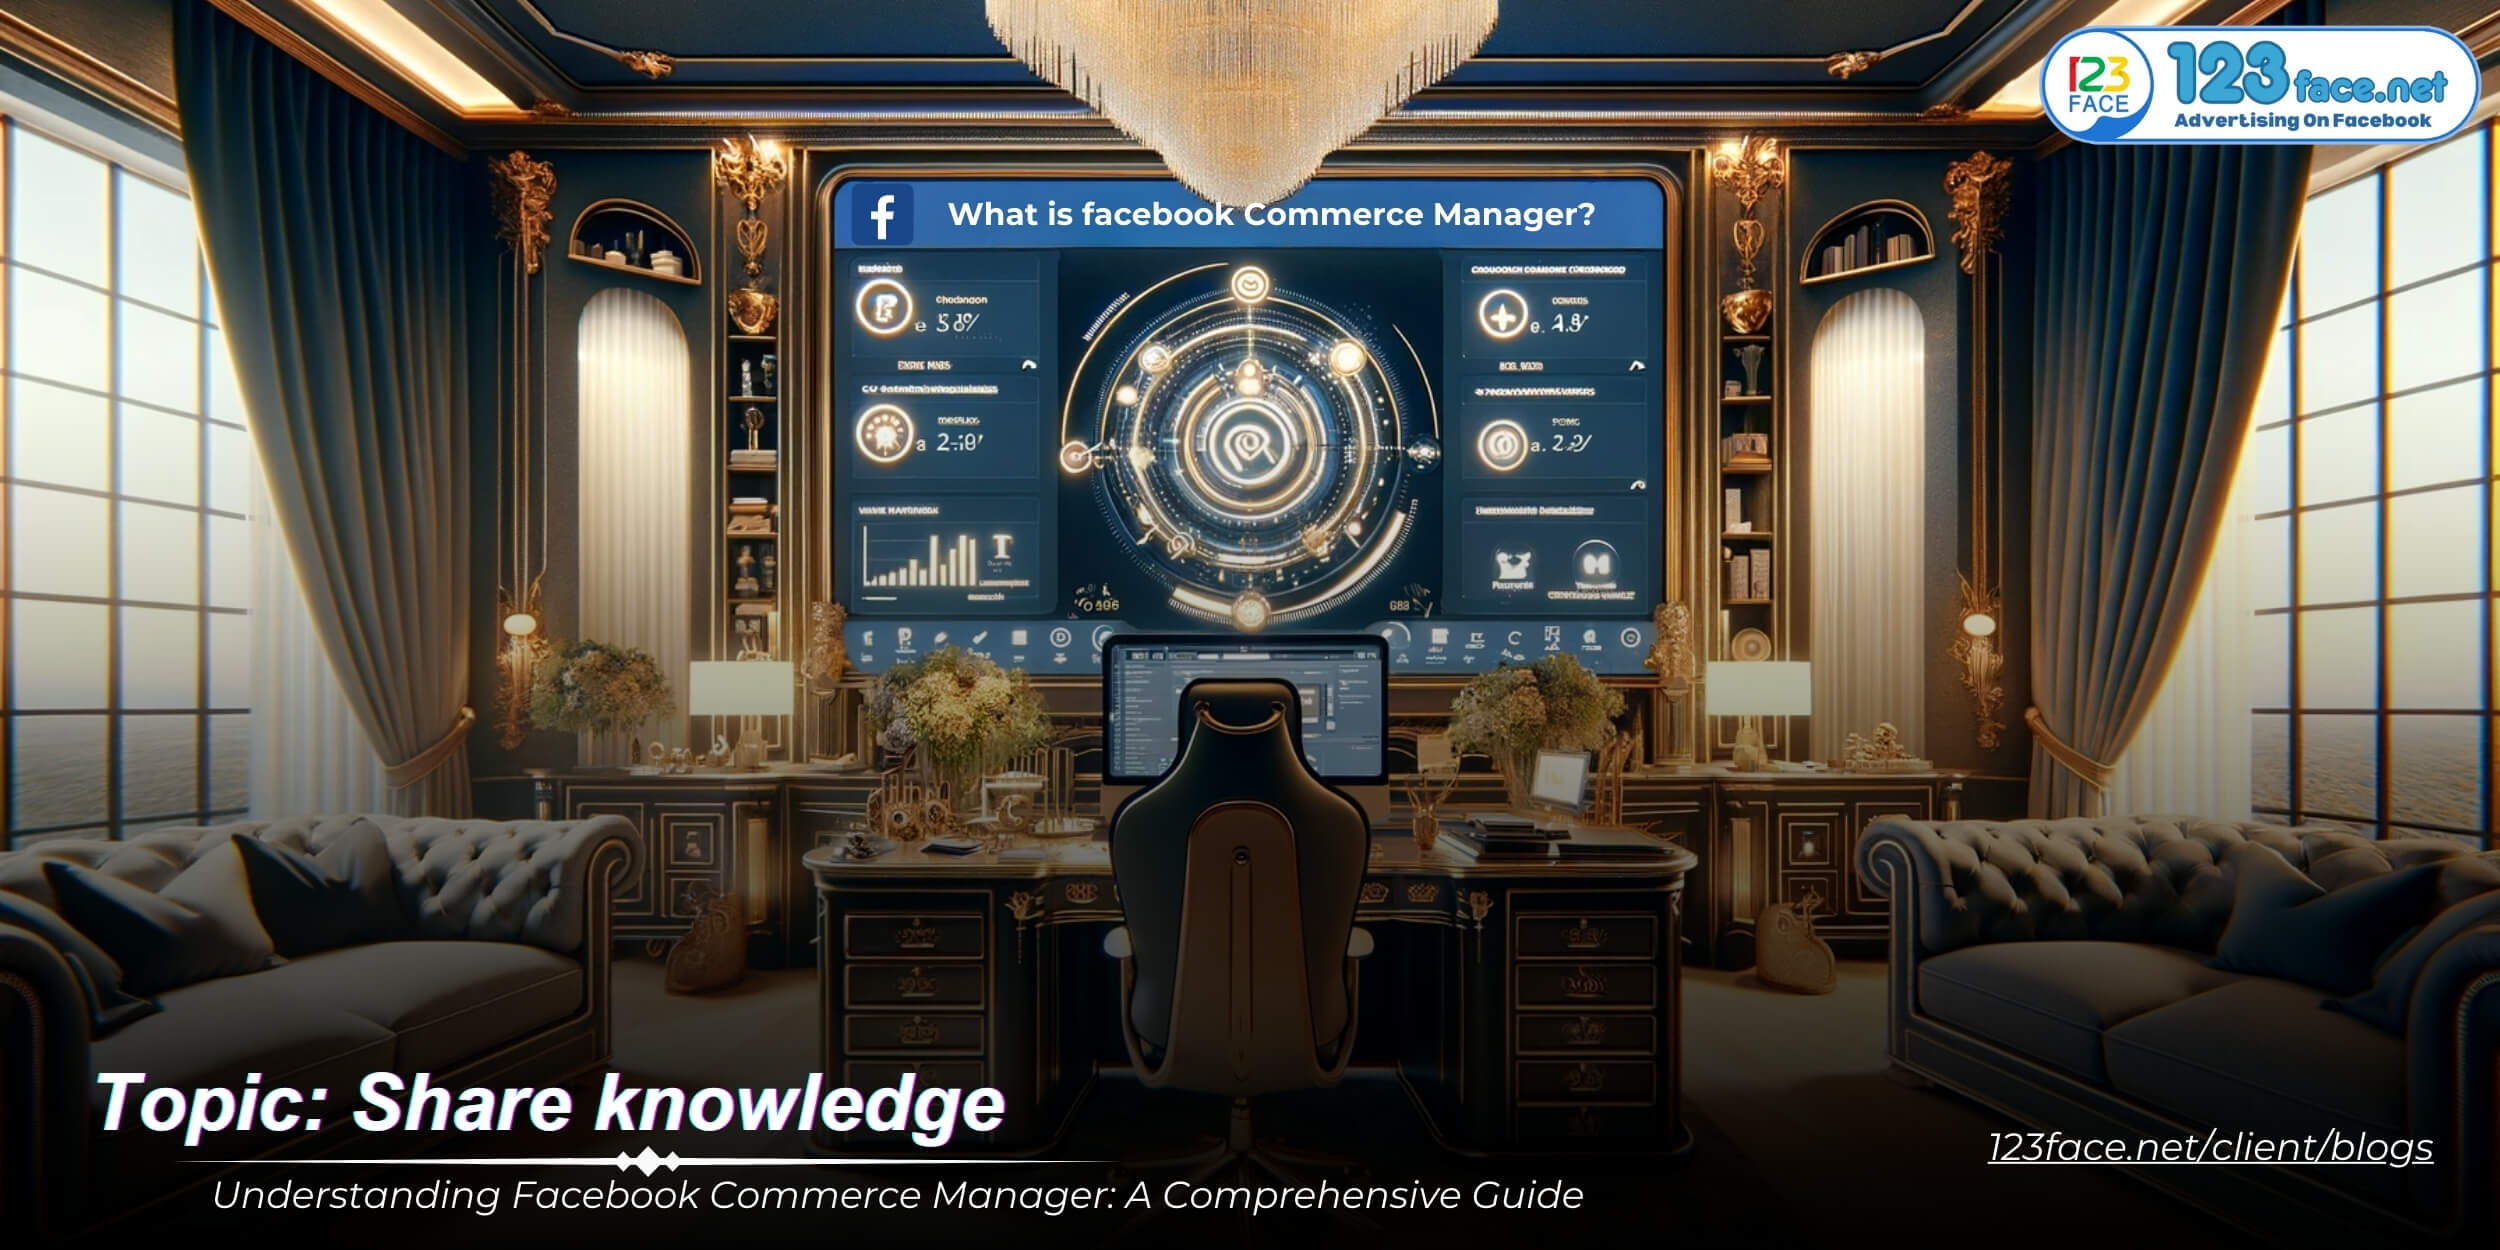 Understanding Facebook Commerce Manager: A Comprehensive Guide